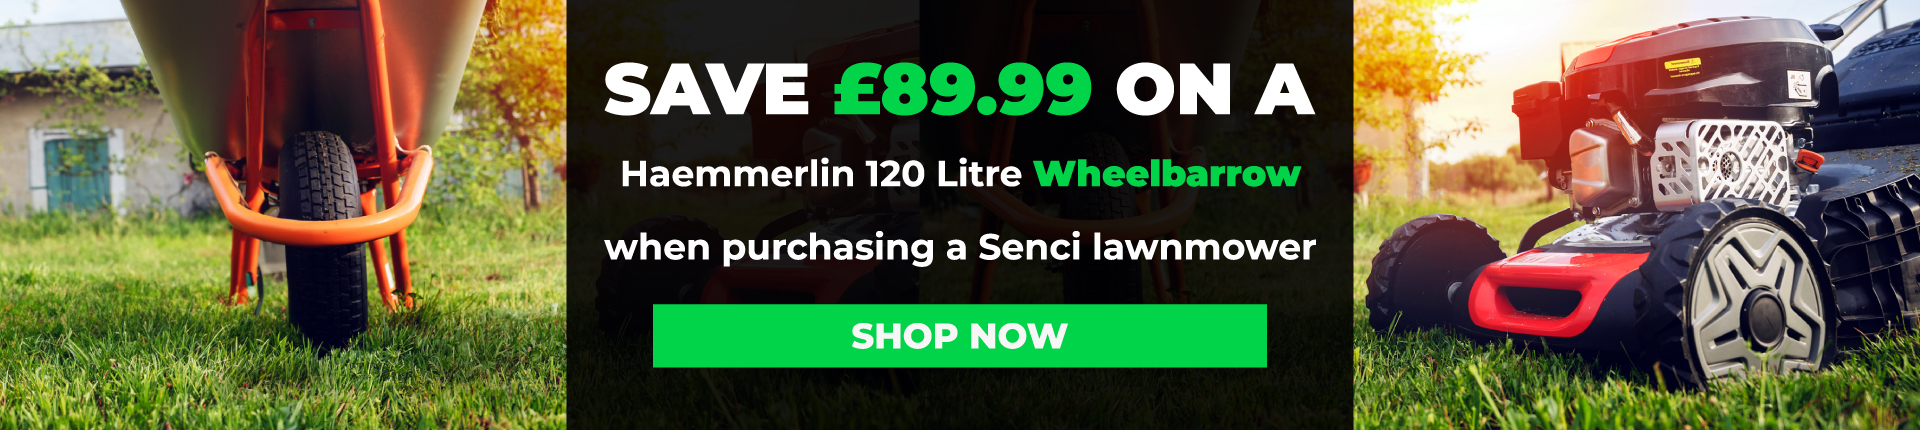 Save 89.99 pound on a wheelbarrow when buying a senci lawnmower